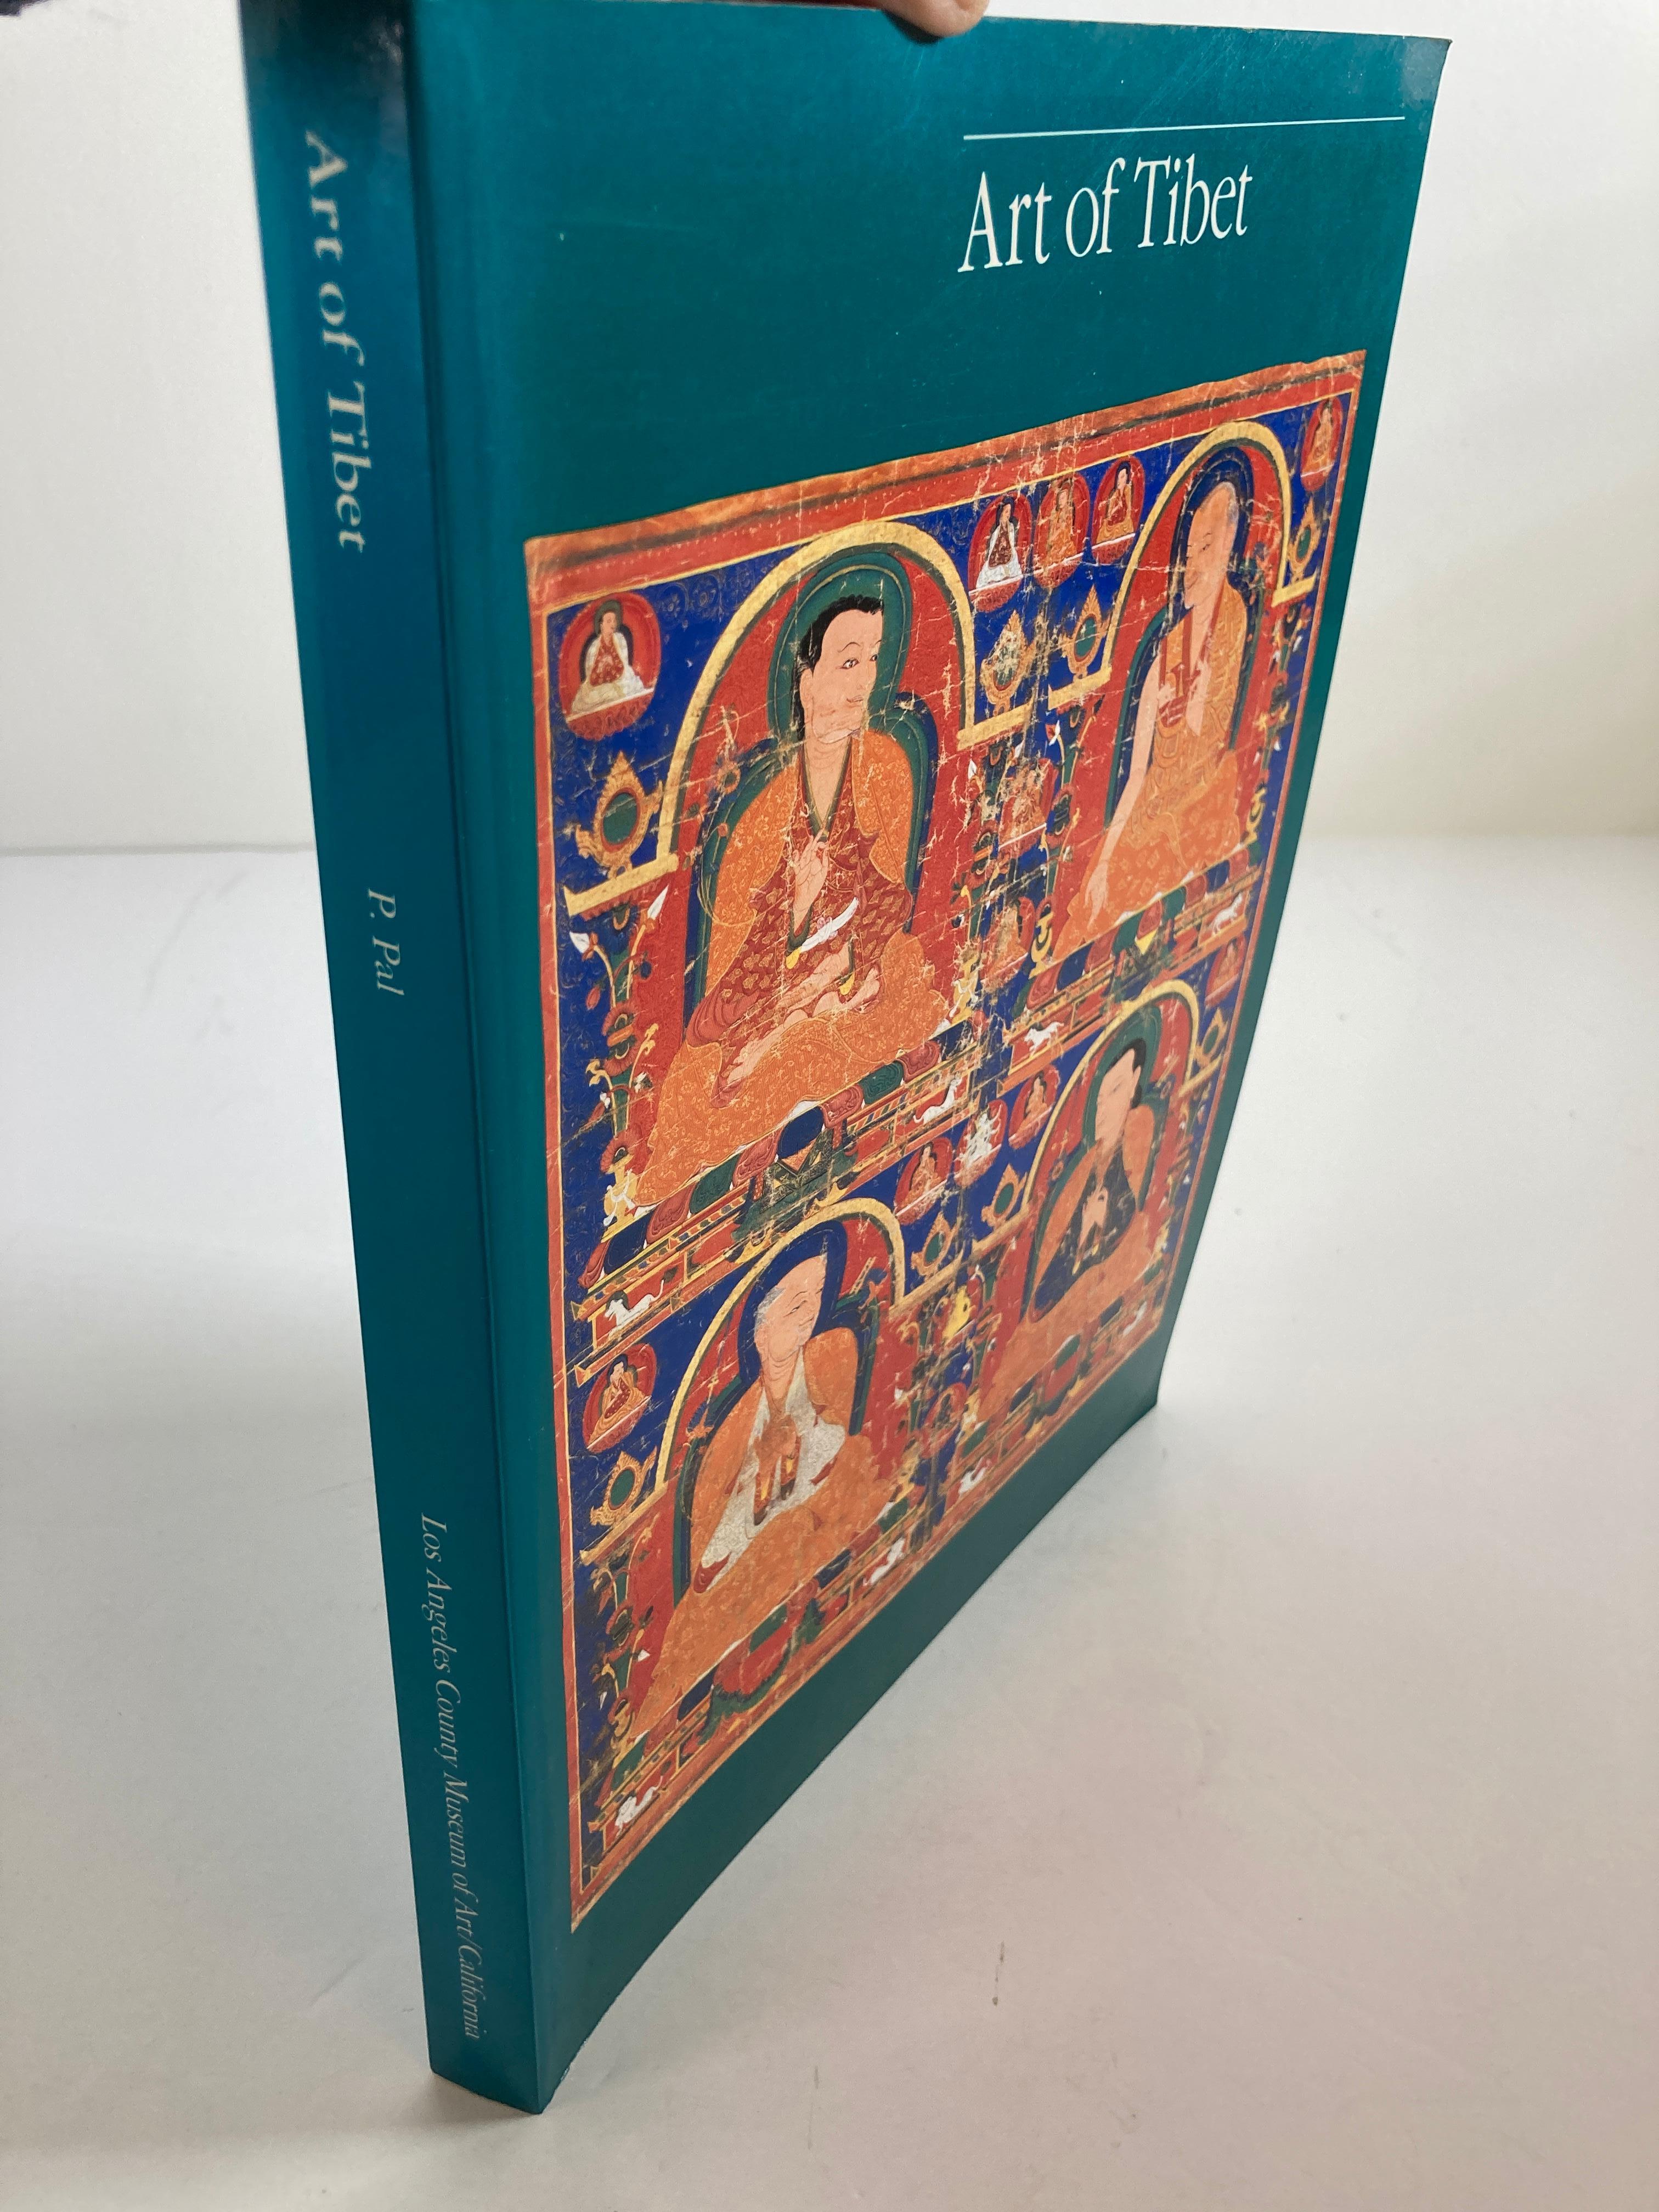 Tibétain Livre « Art of Tibet » (L'art du Tibet) de Pratapaditya Pal en vente